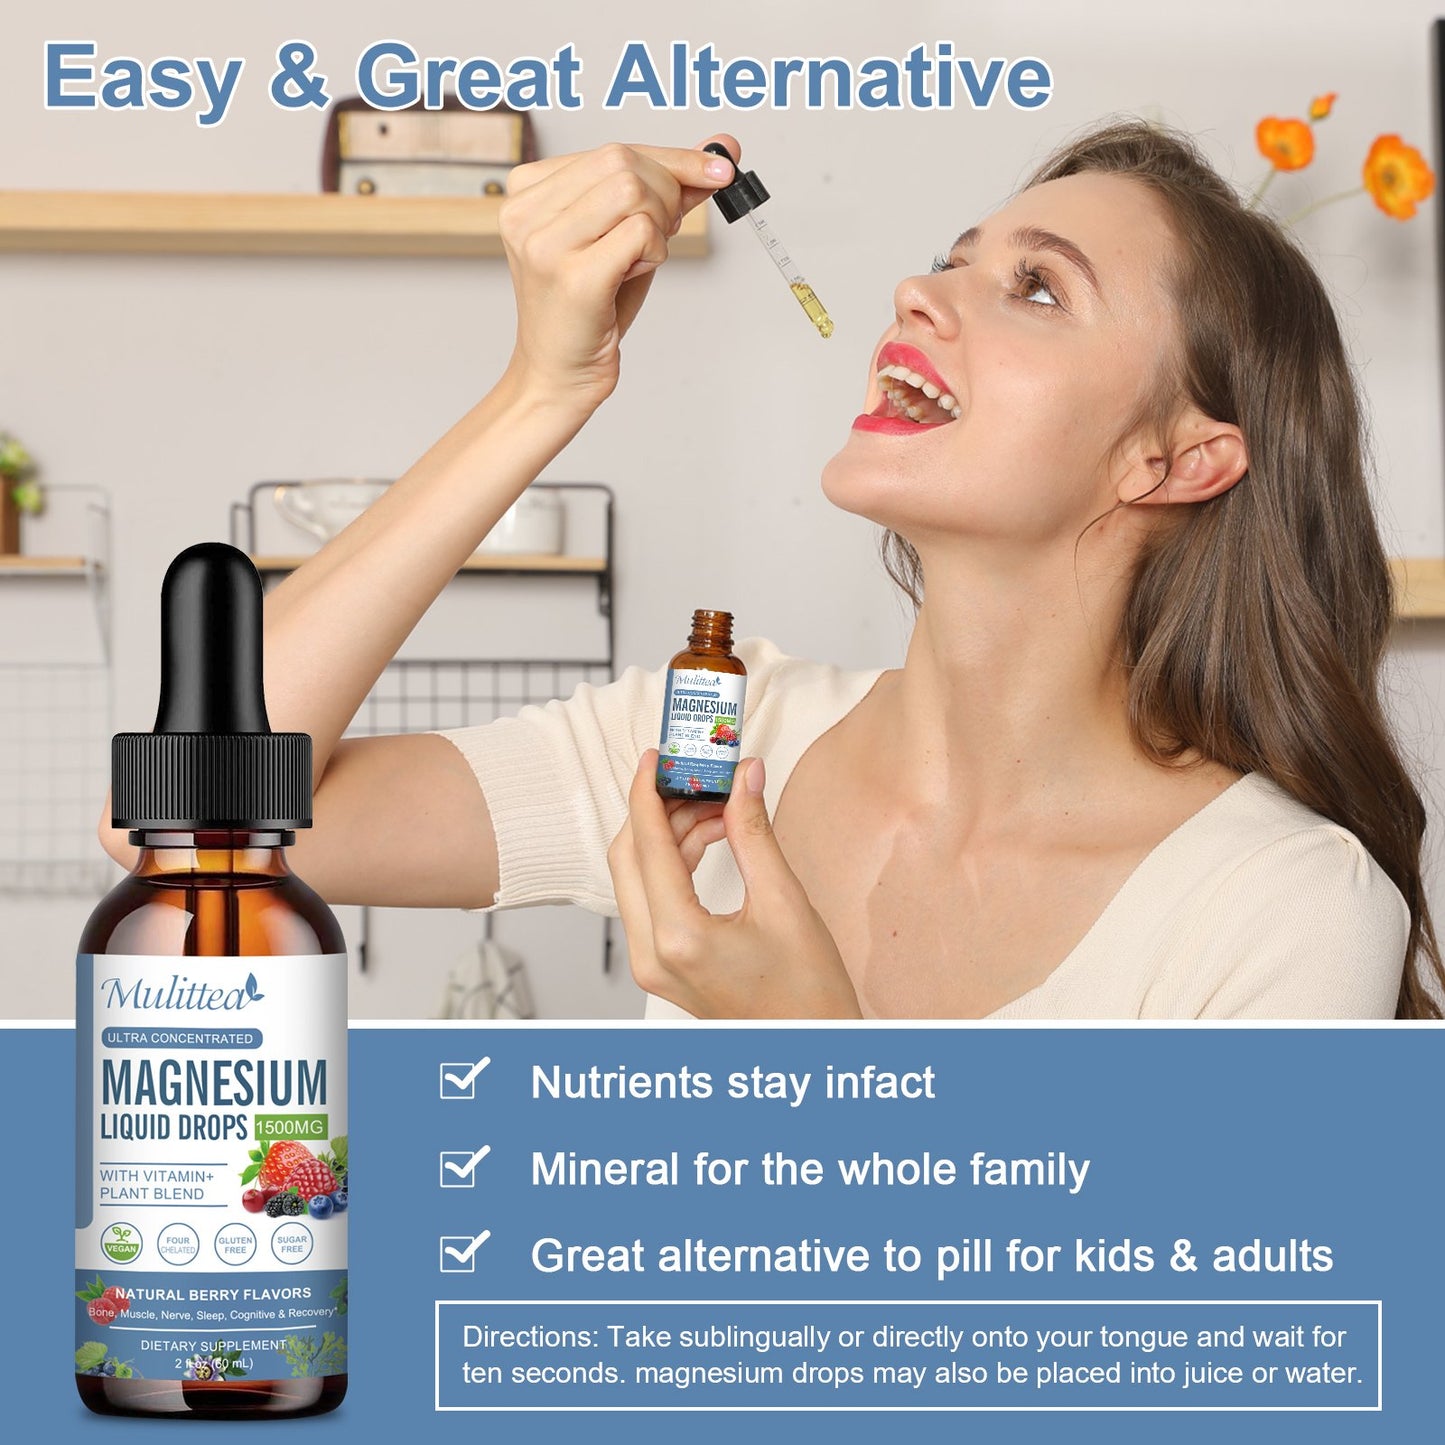 Magnesium Glycinate Liquid Drop-Natural Berry Flavors